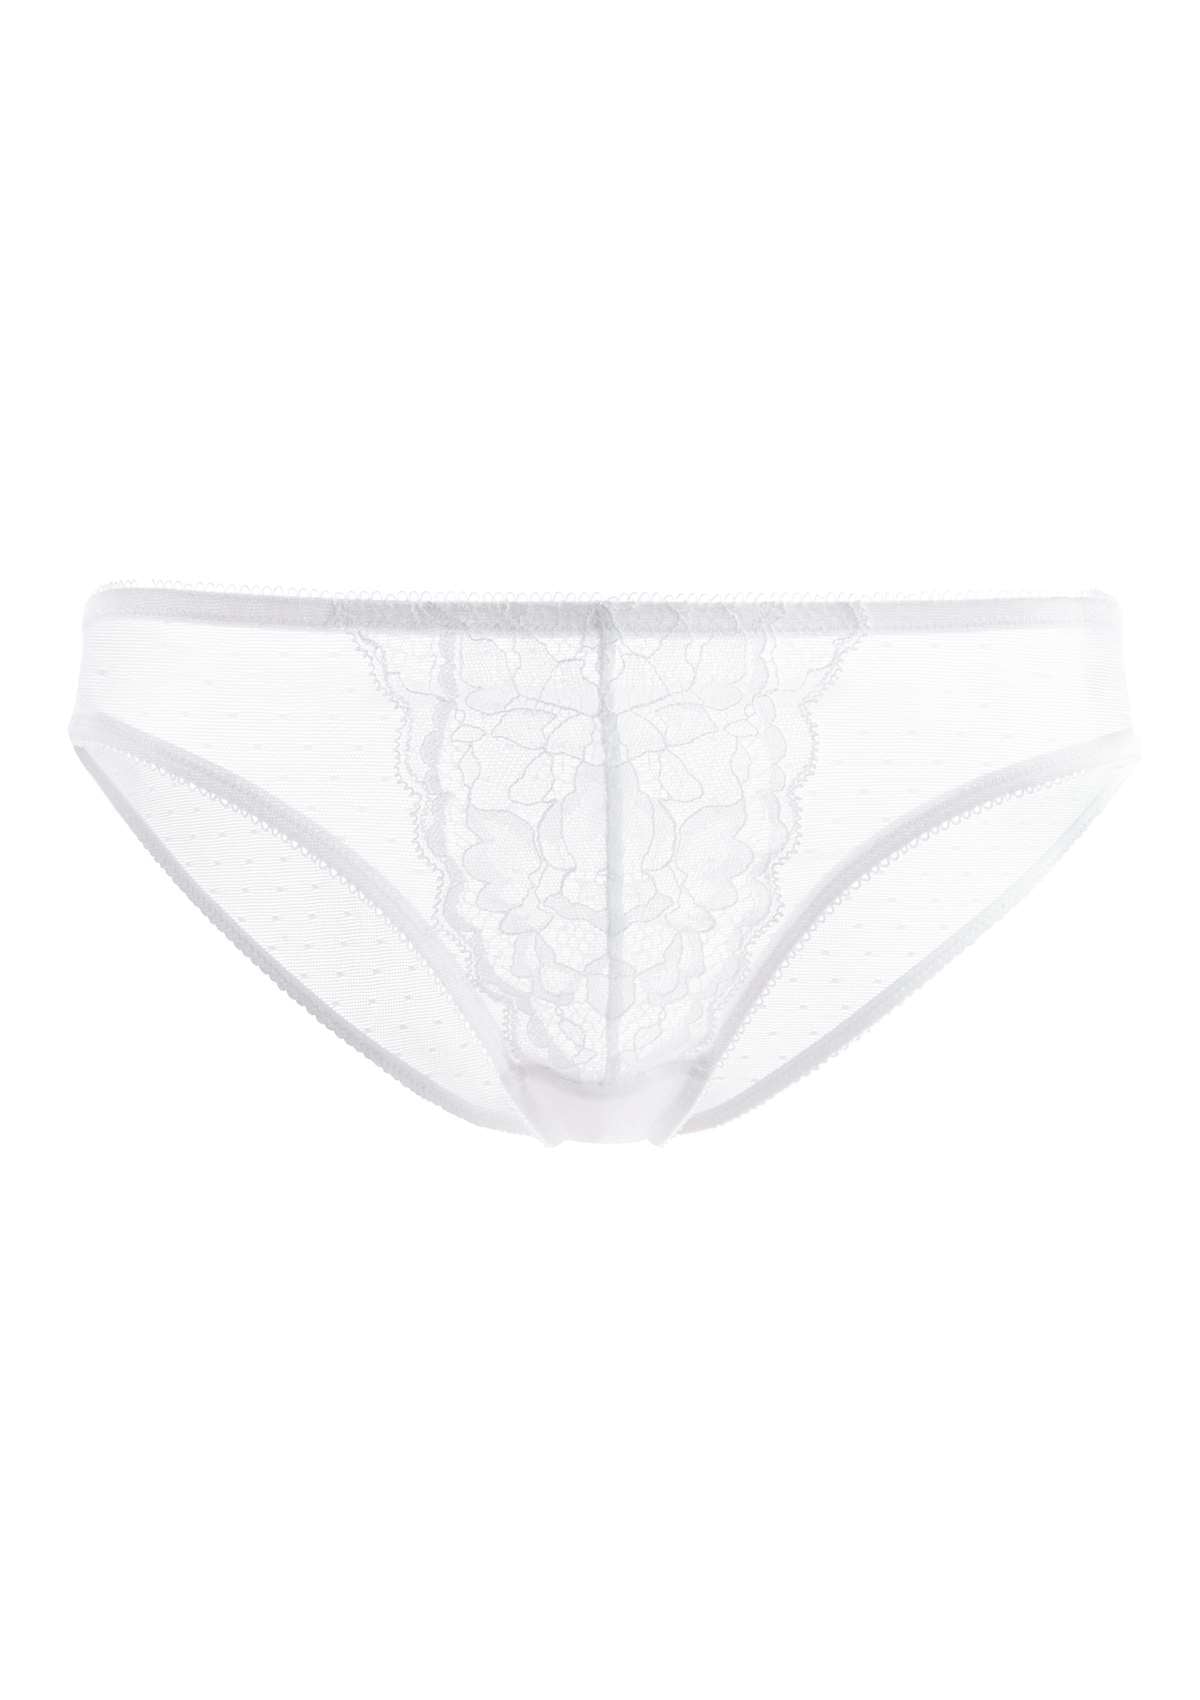 HSIA Enchante Mid-Rise Sheer Comfortable Trendy Lace Floral Mesh Pantie - L / White / Bikini